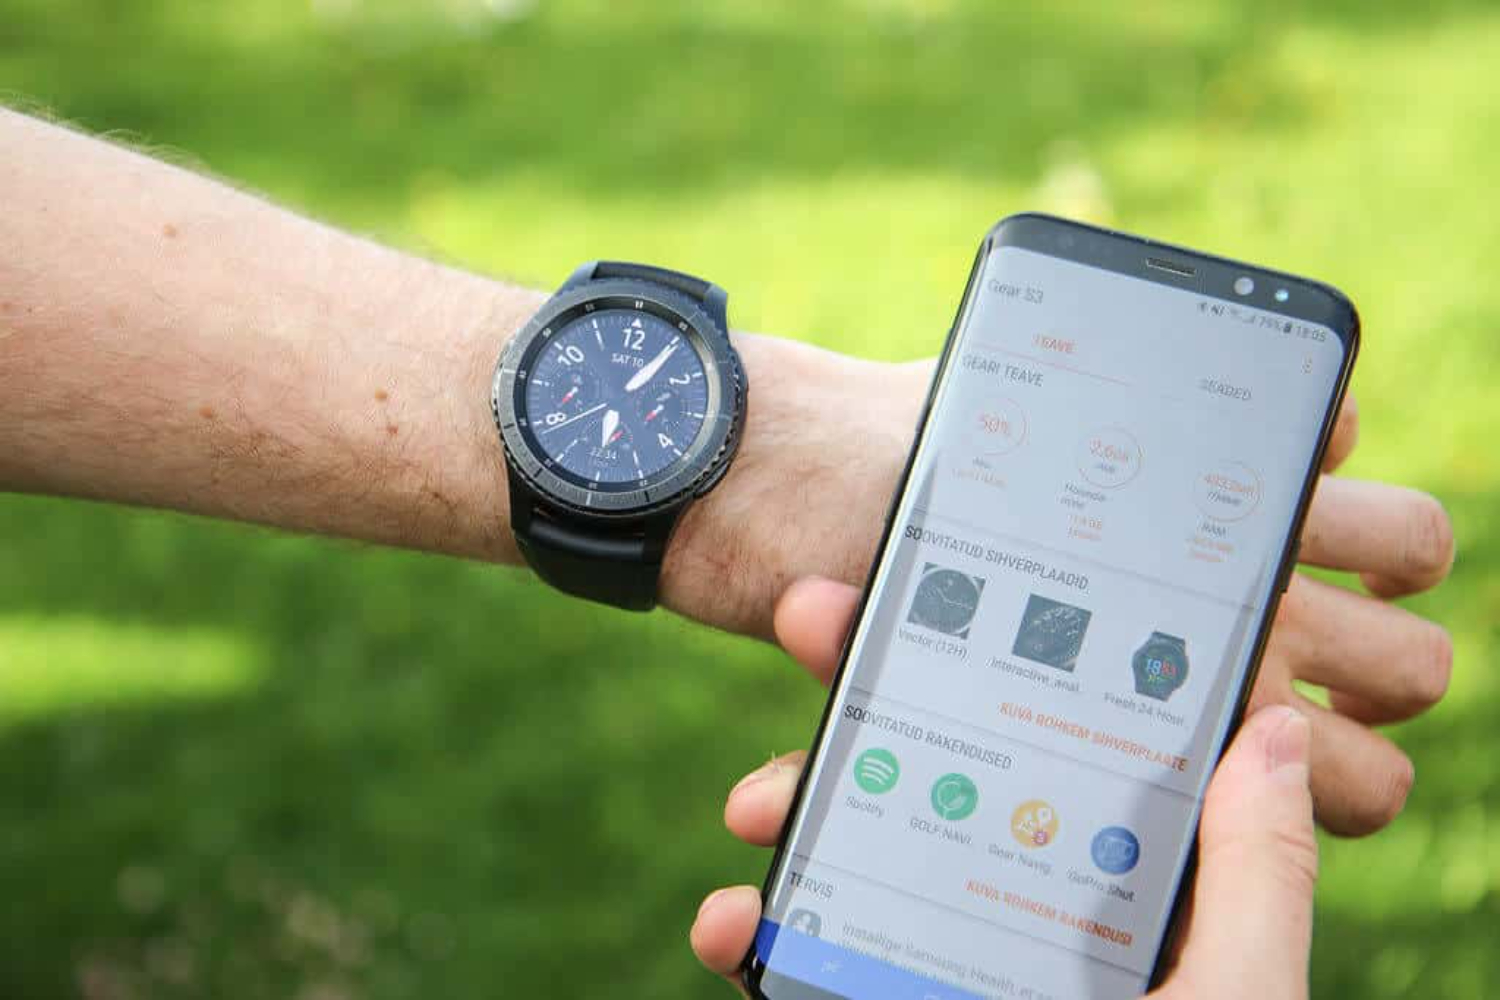 Best Navigation Apps for Samsung Gear S3